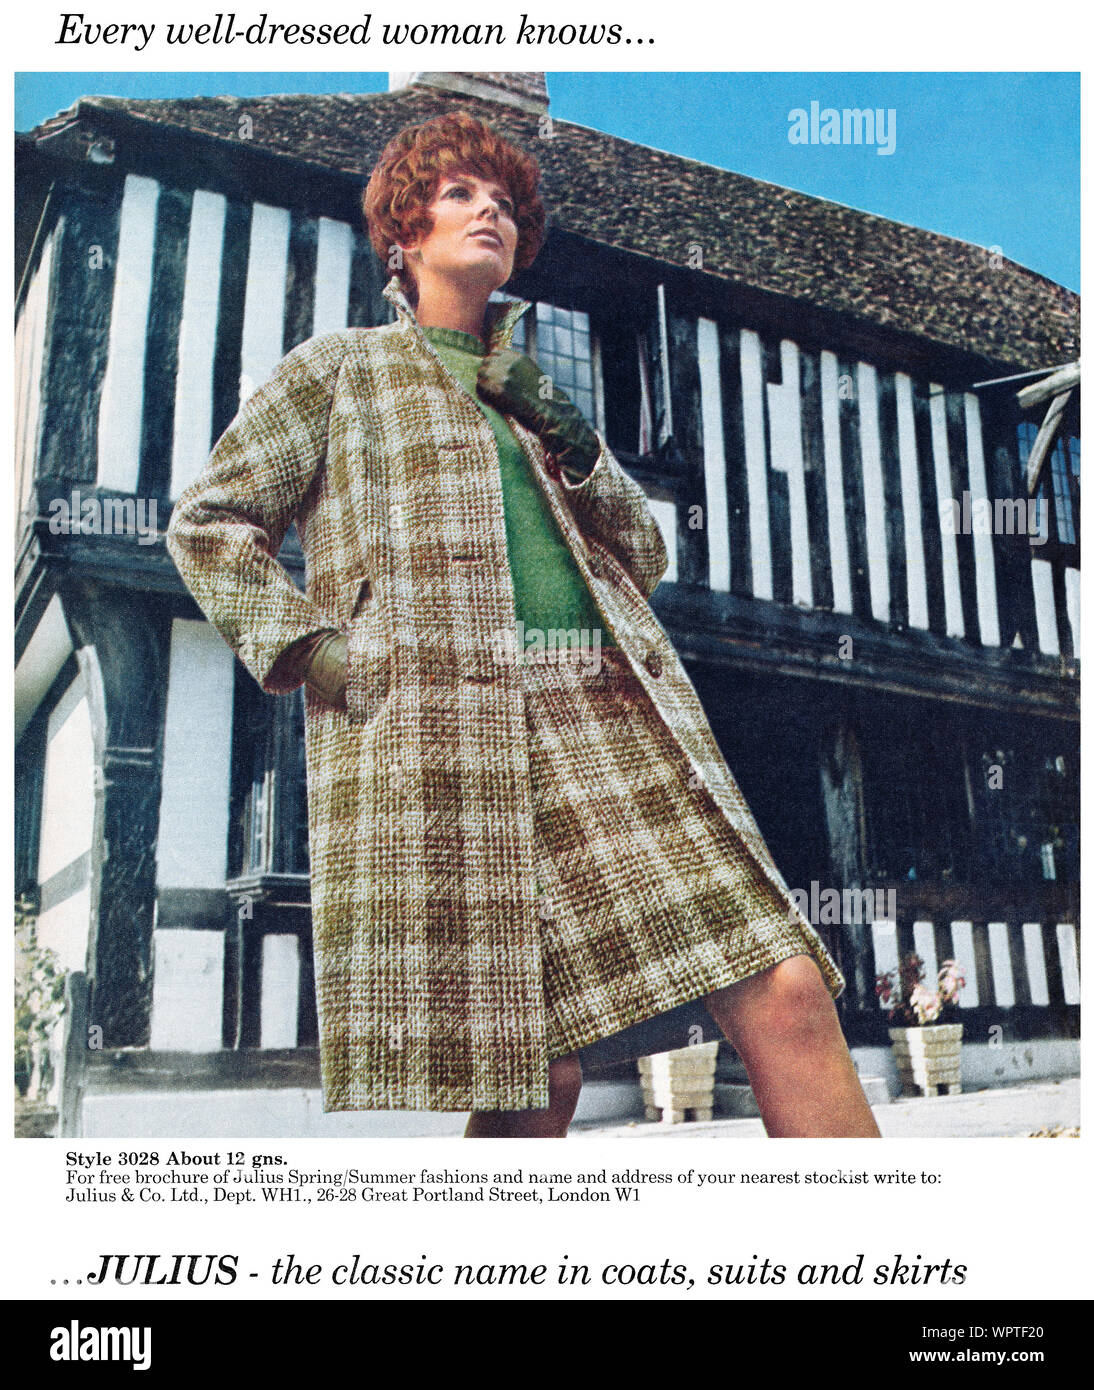 1968 British advertisement for Julius women's fashions. Stock Photo